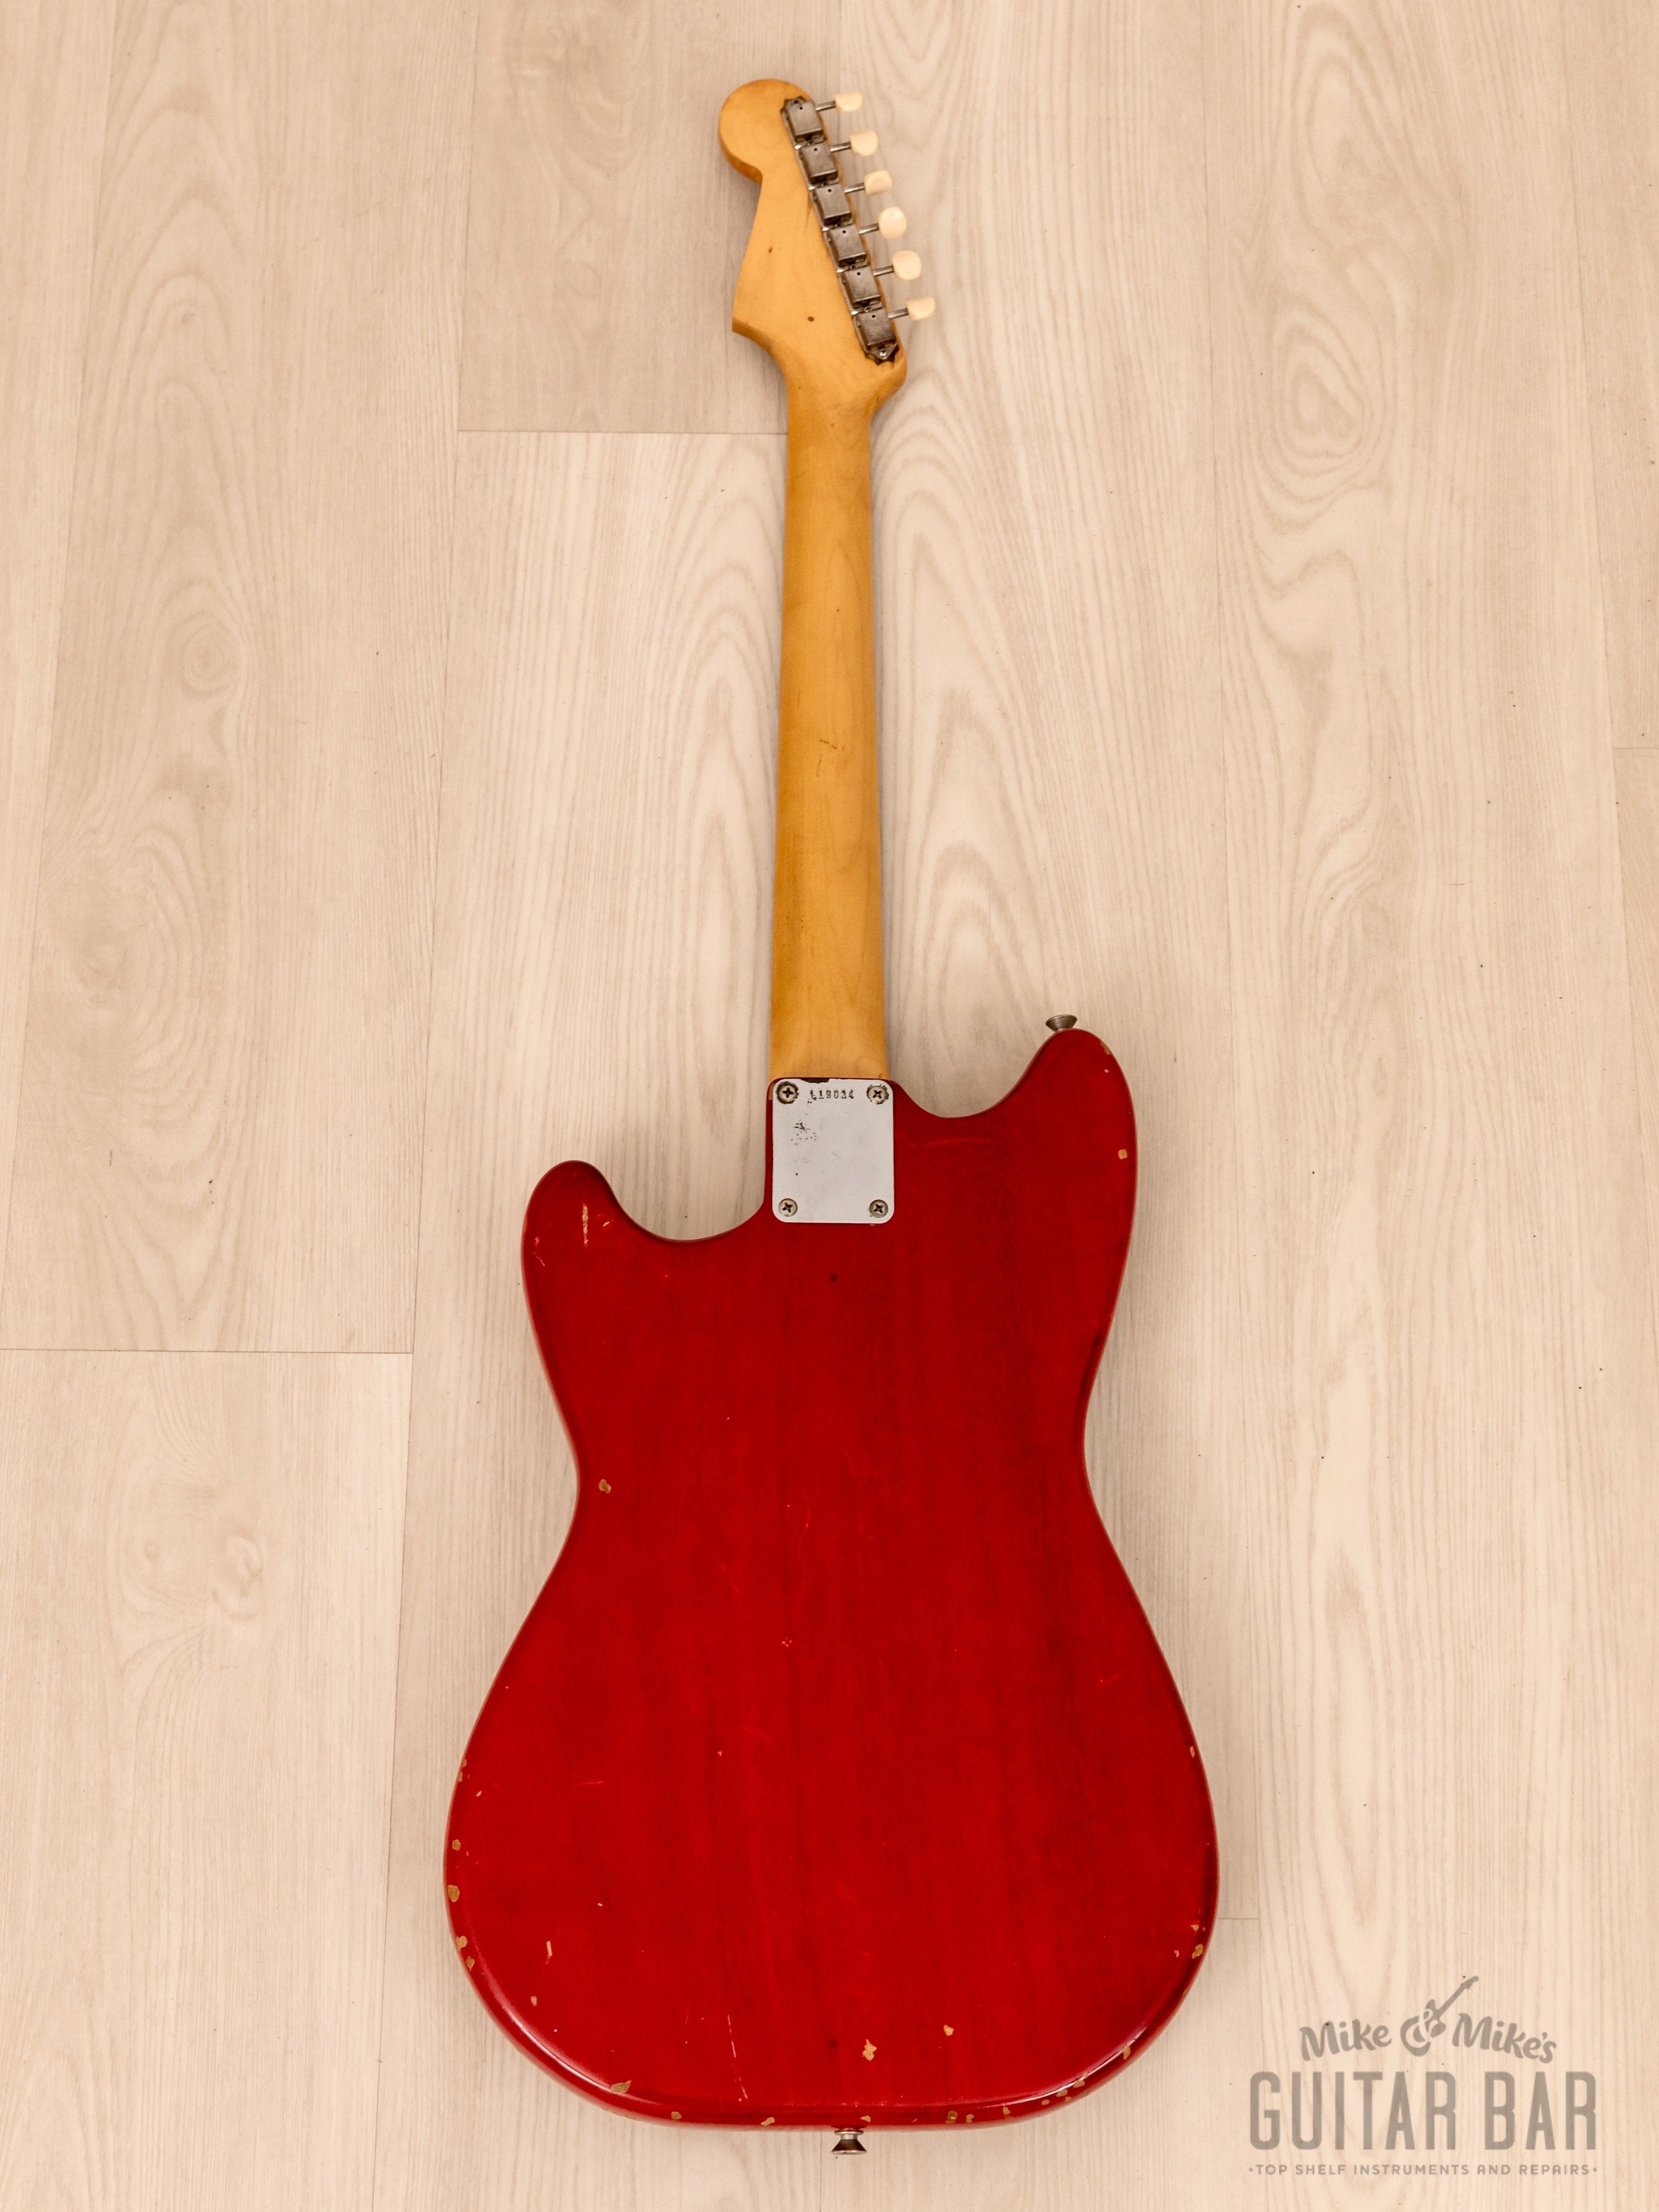 1963 Fender Duo Sonic Vintage Short Scale Guitar w/ Mahogany Body, 100% Original